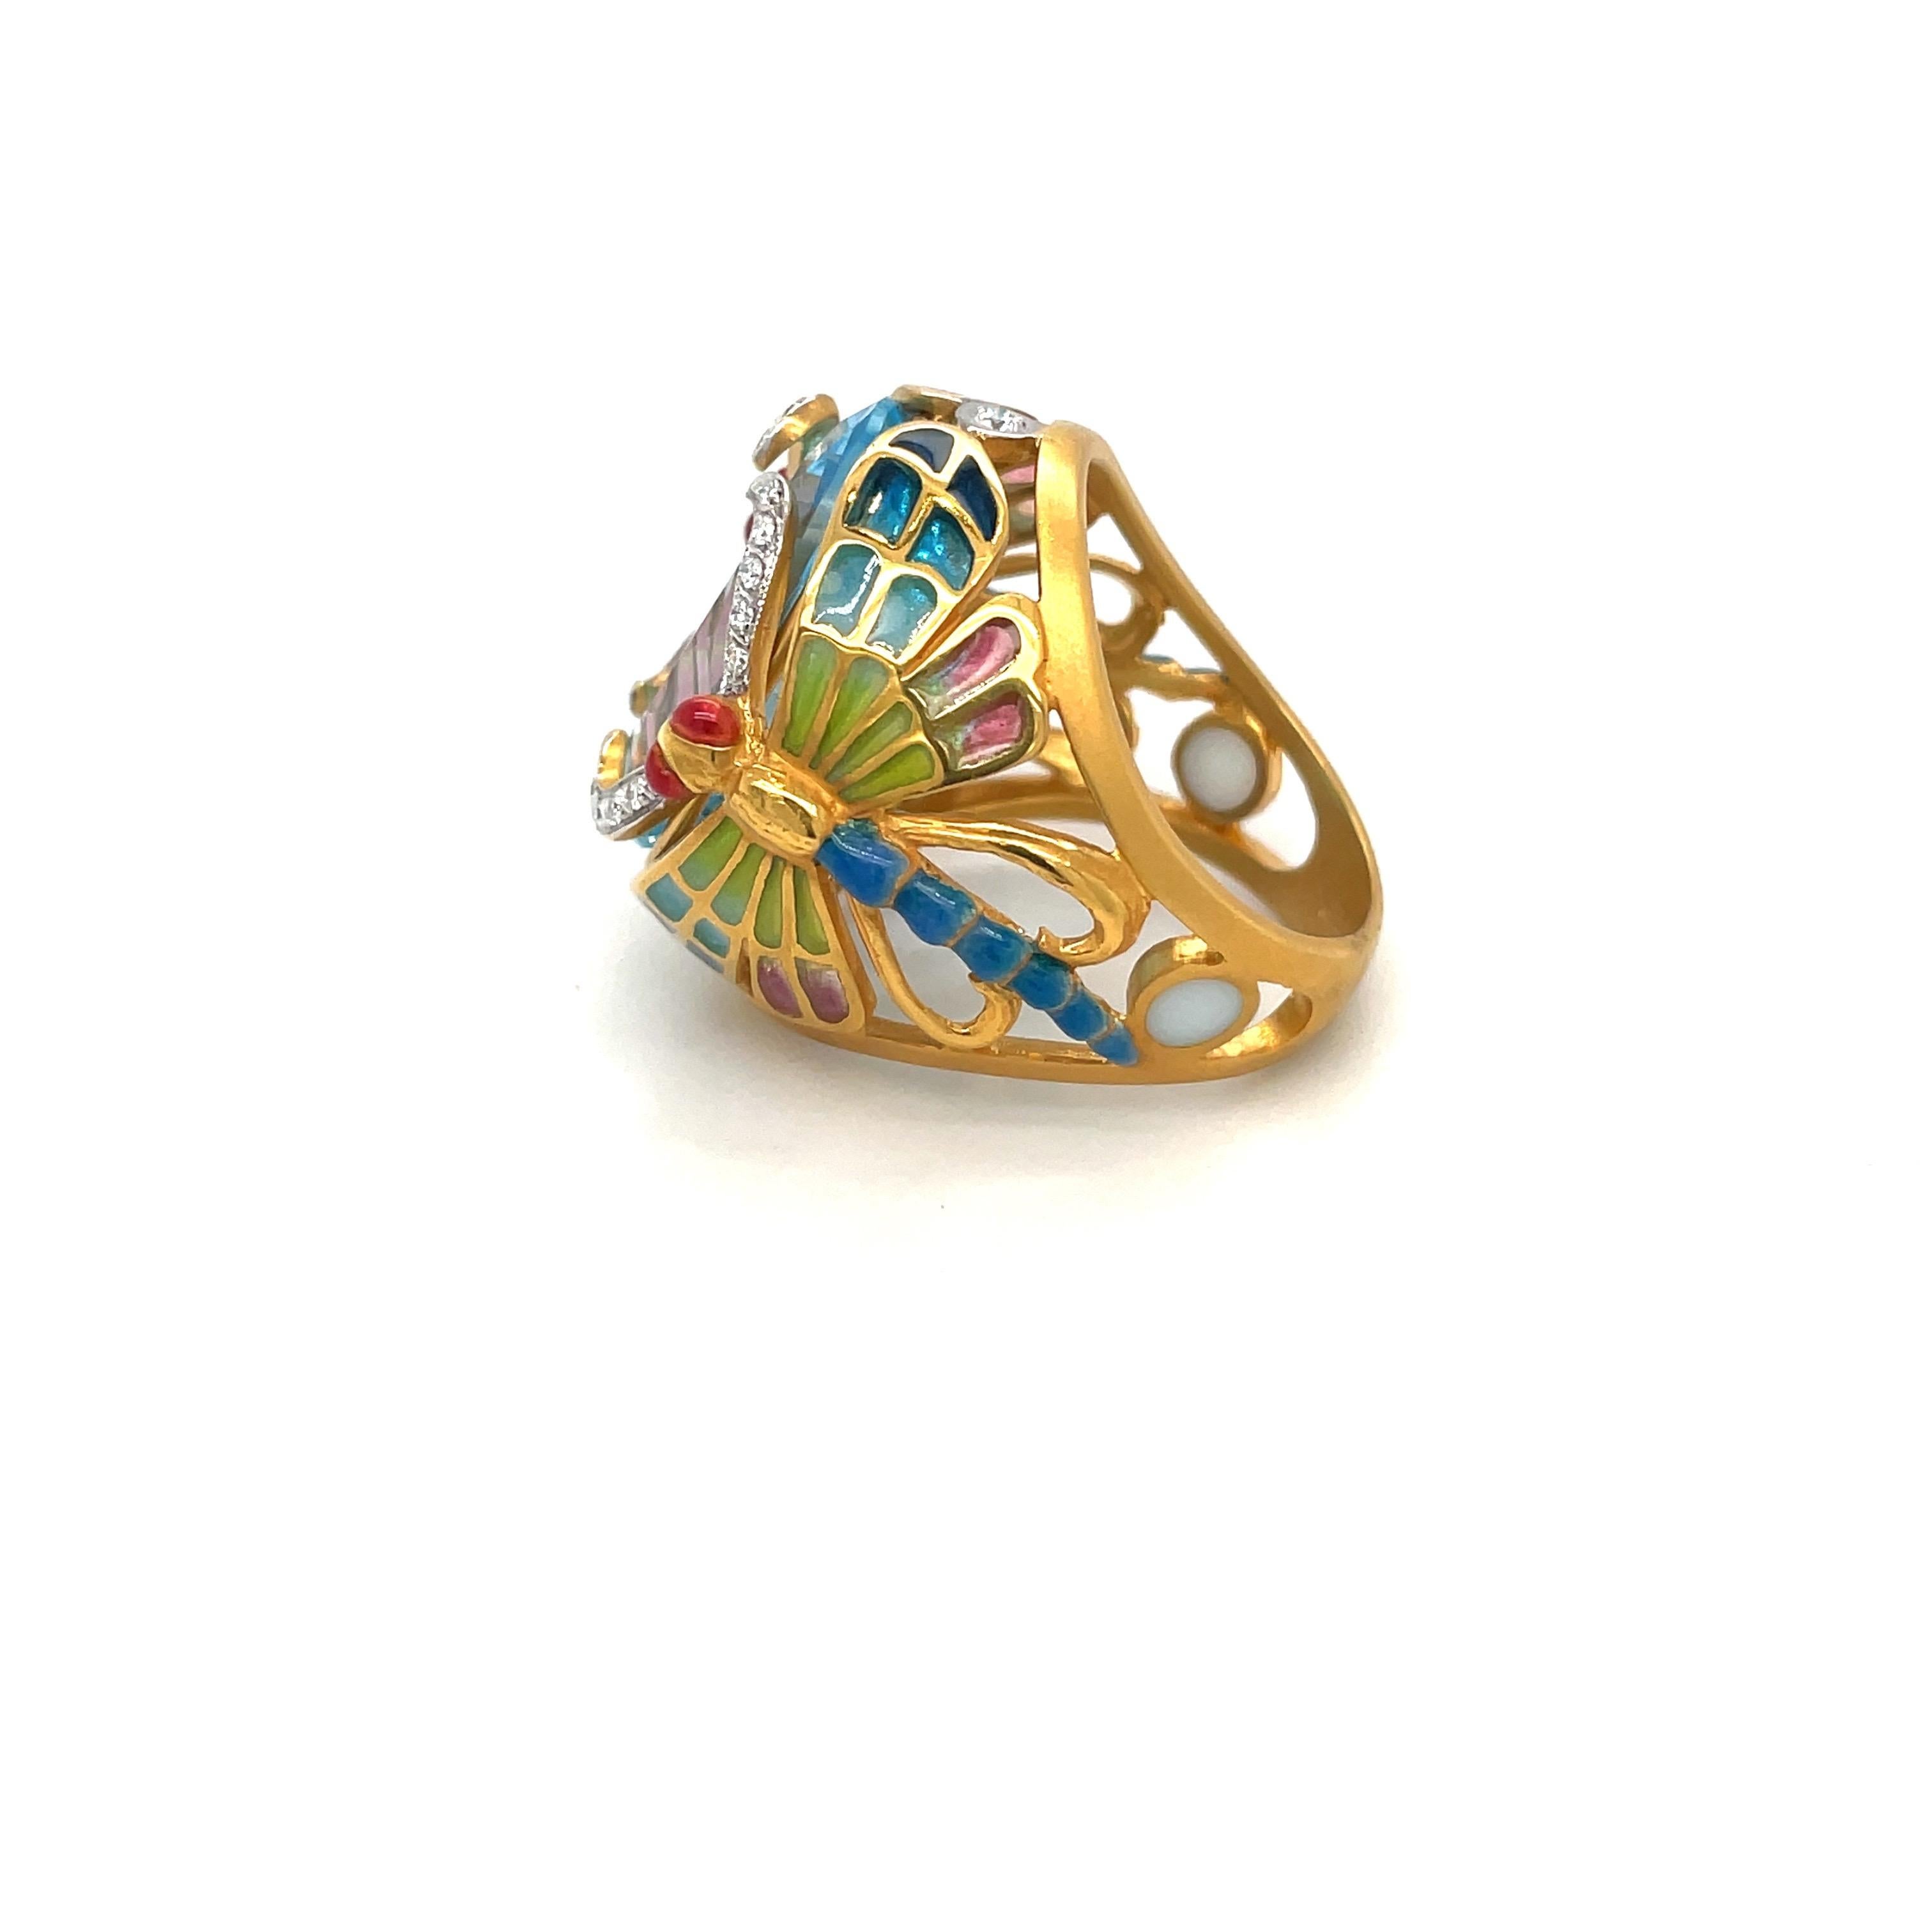 Oval Cut Masriera 18kt Yellow Gold Dragonfly Ring 20.66ct Blue Topaz, Enamel & Diamonds